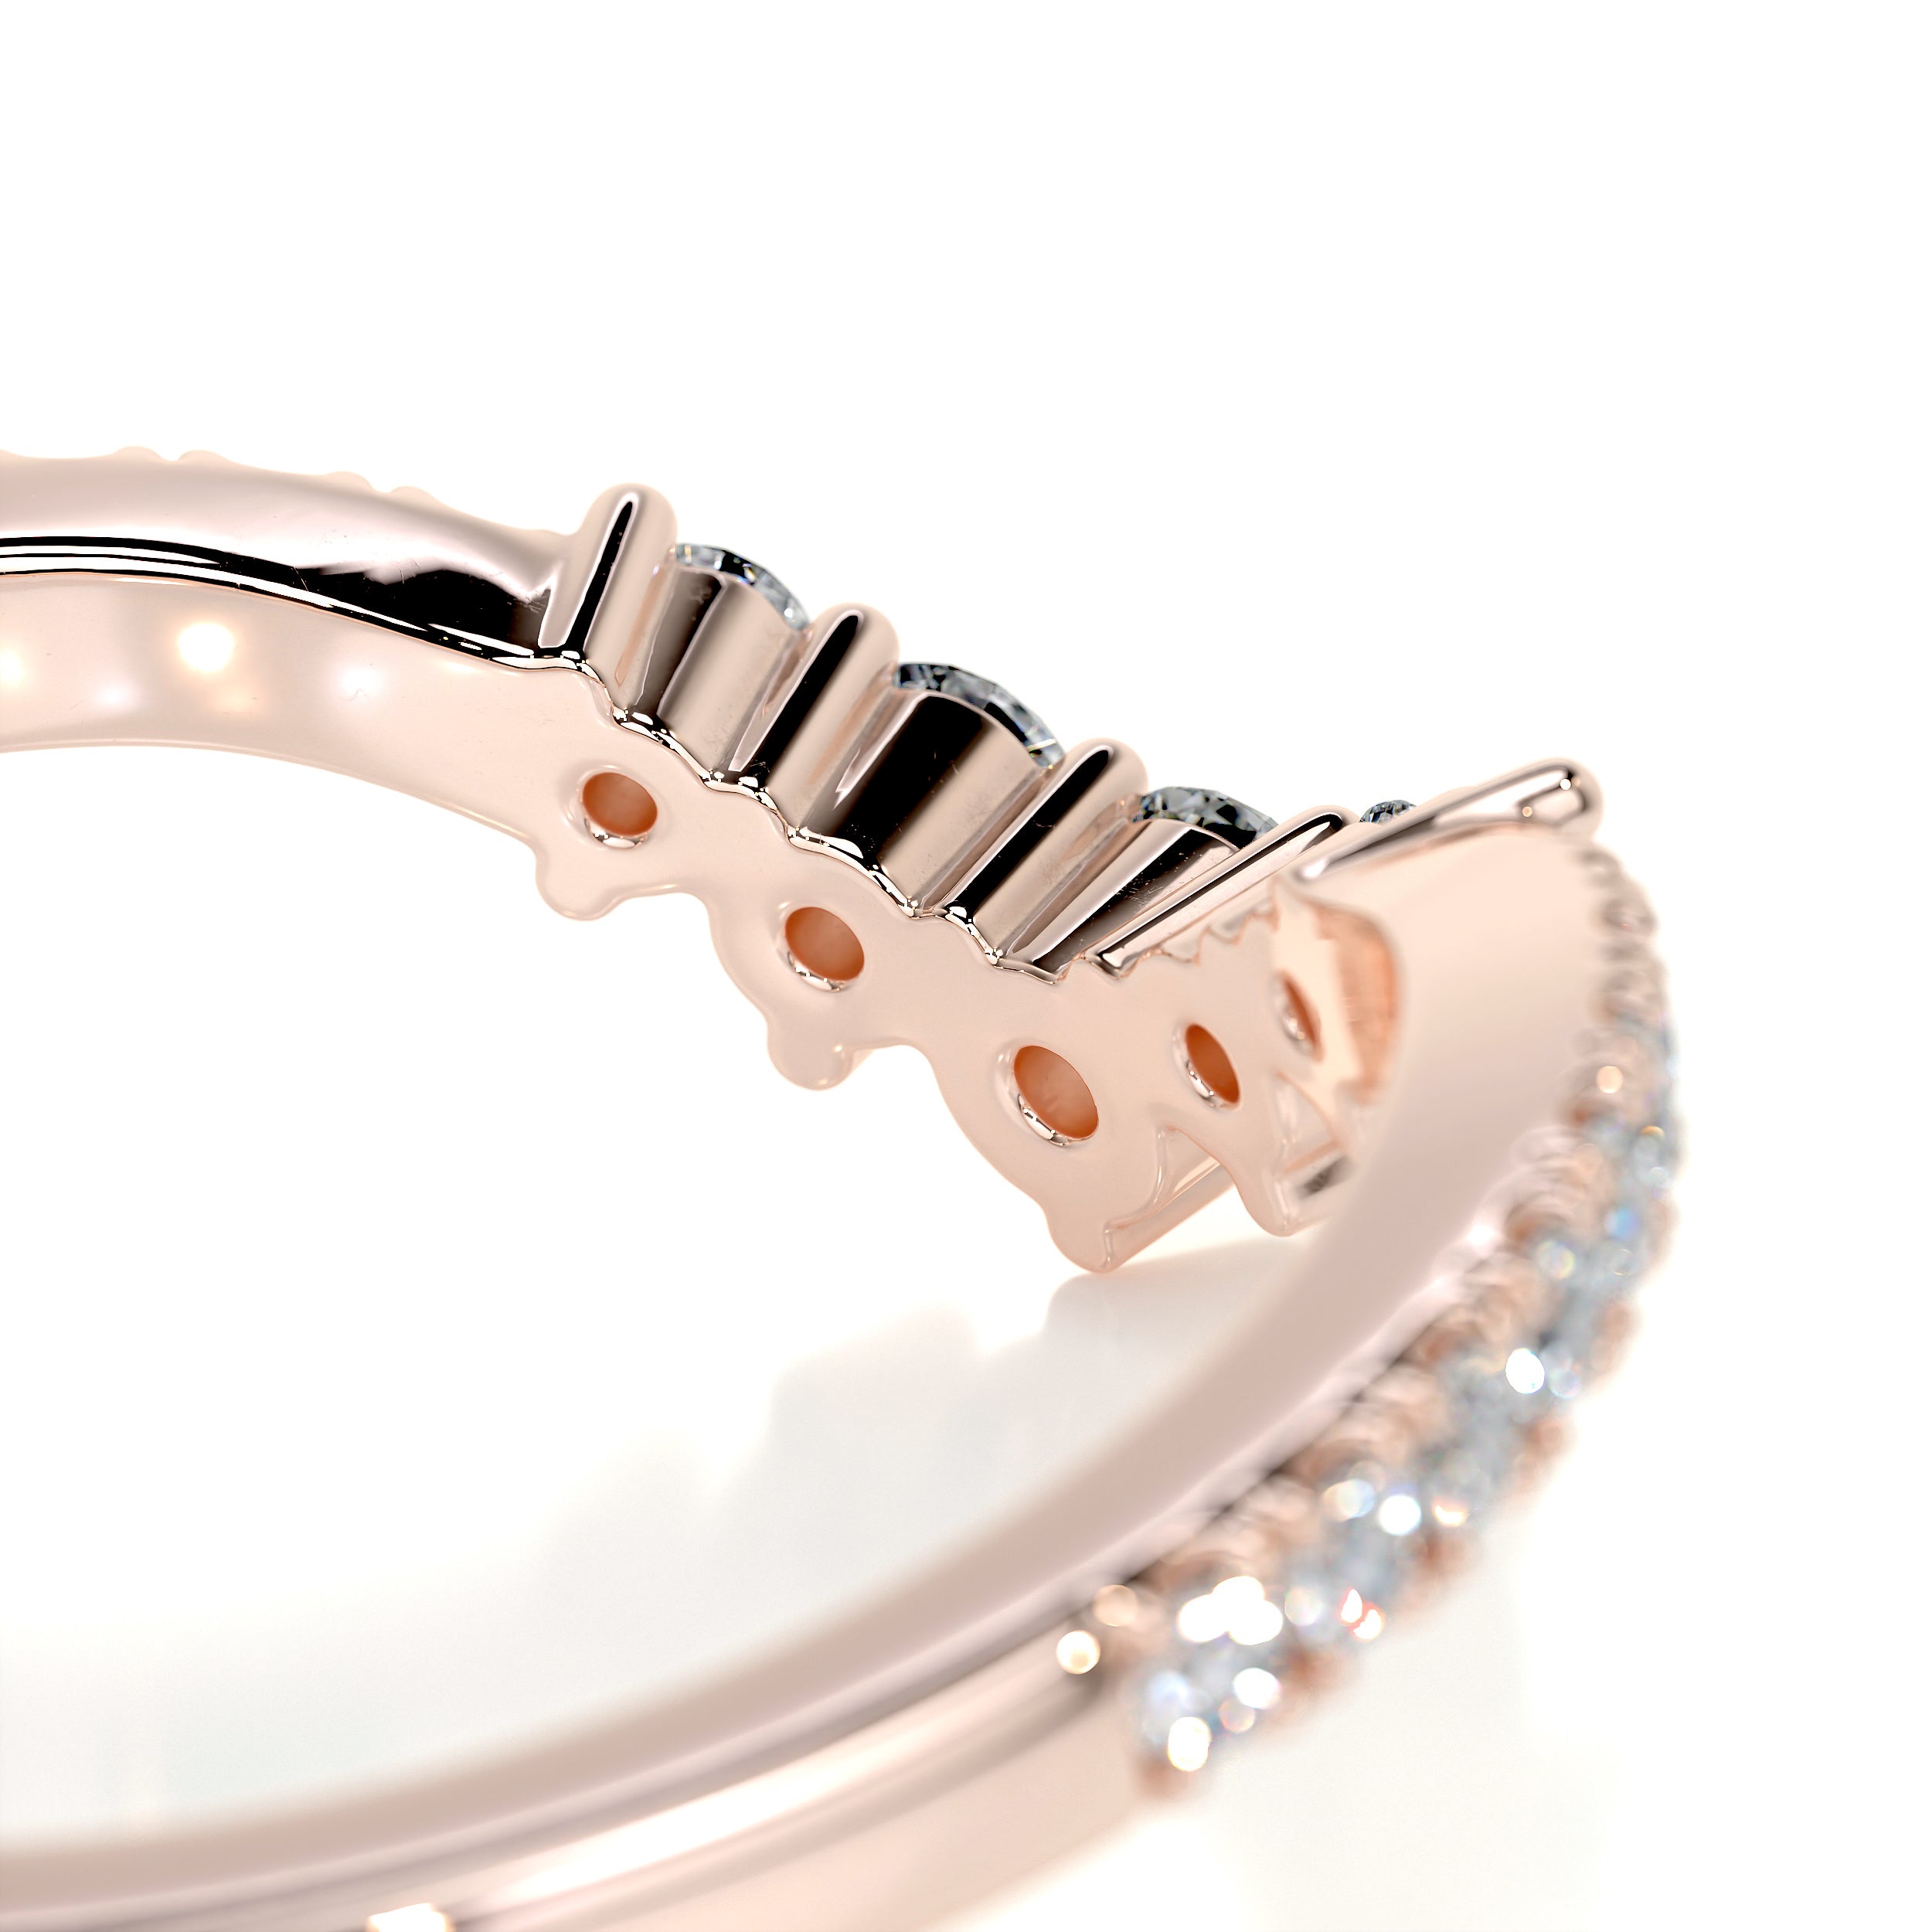 Mia Diamond Wedding Ring   (0.35 Carat) -14K Rose Gold